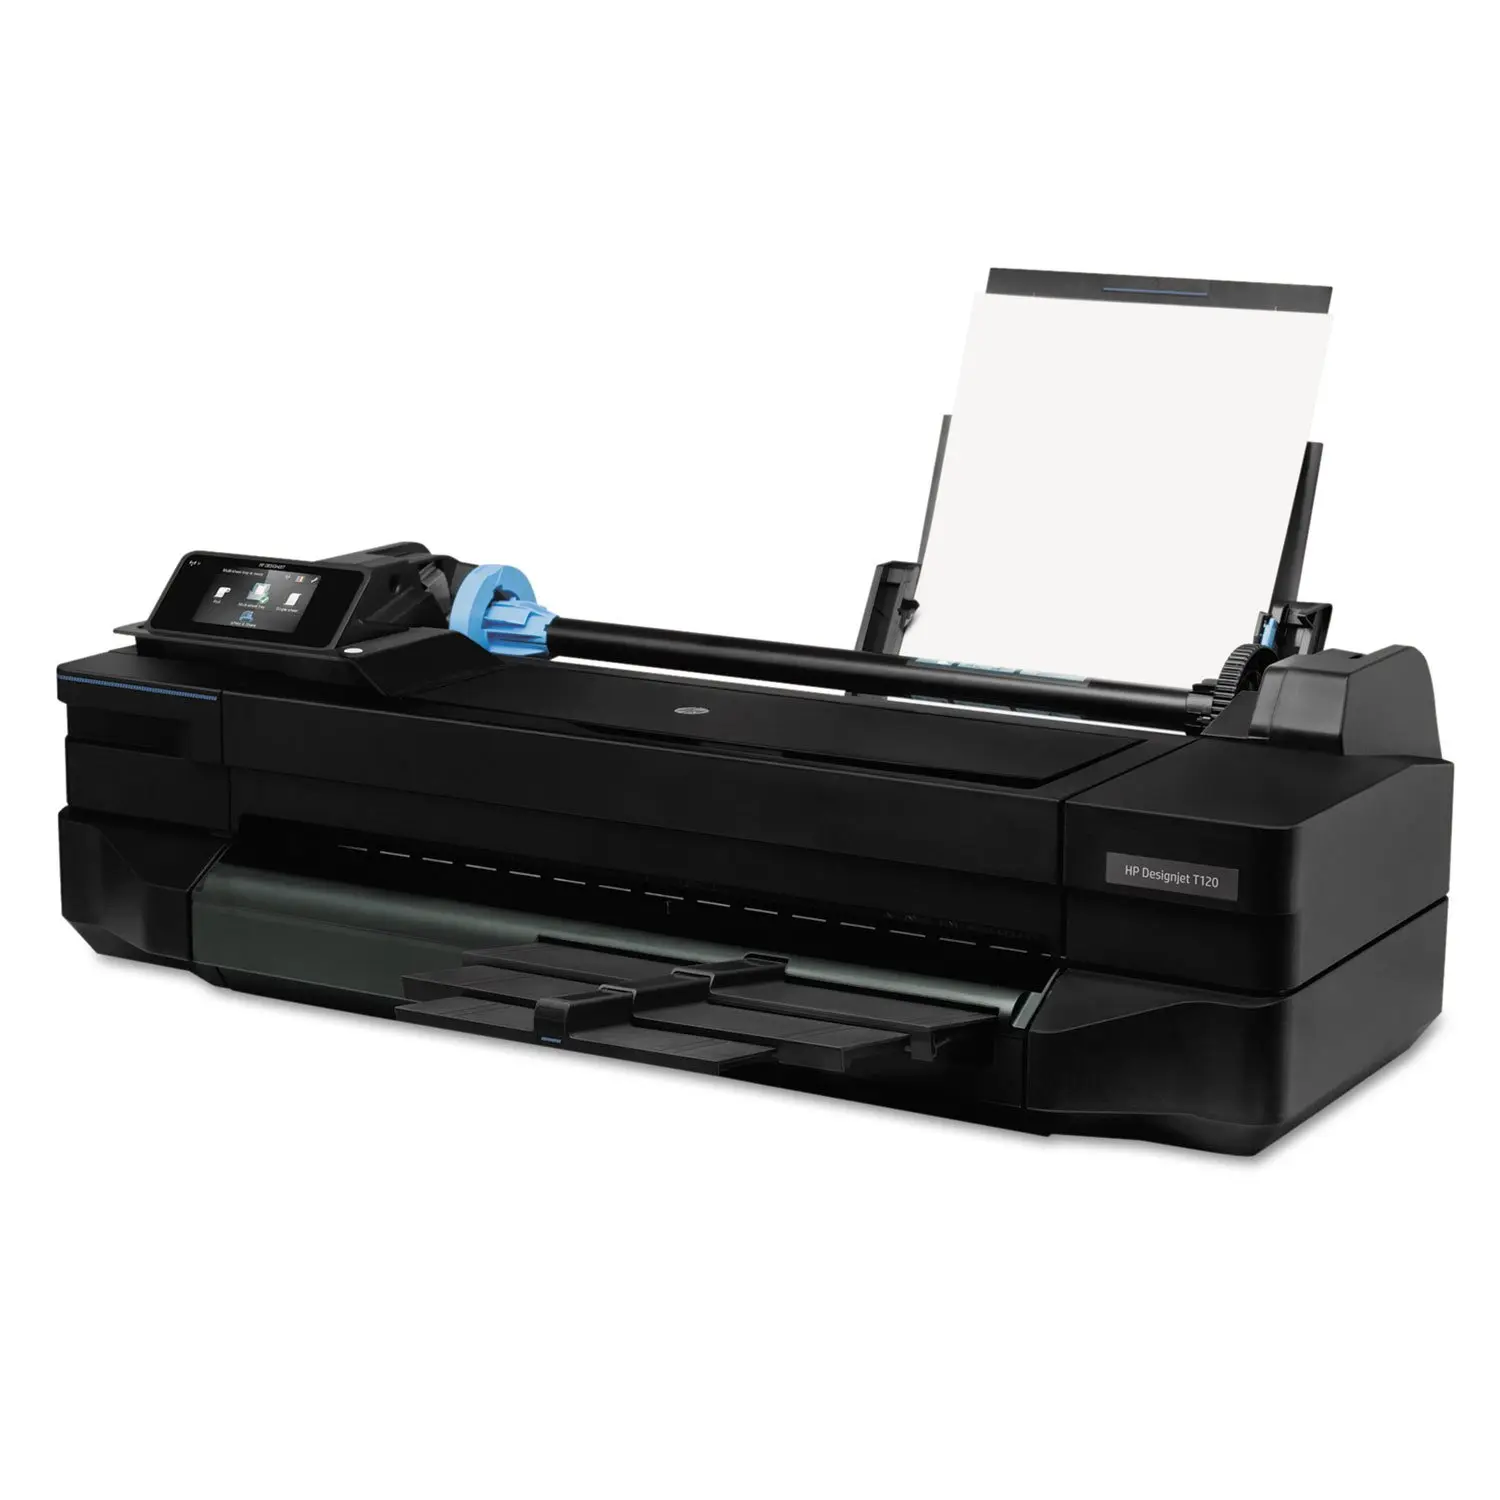 Hp designjet t120 printer - high-quality prints & compact design